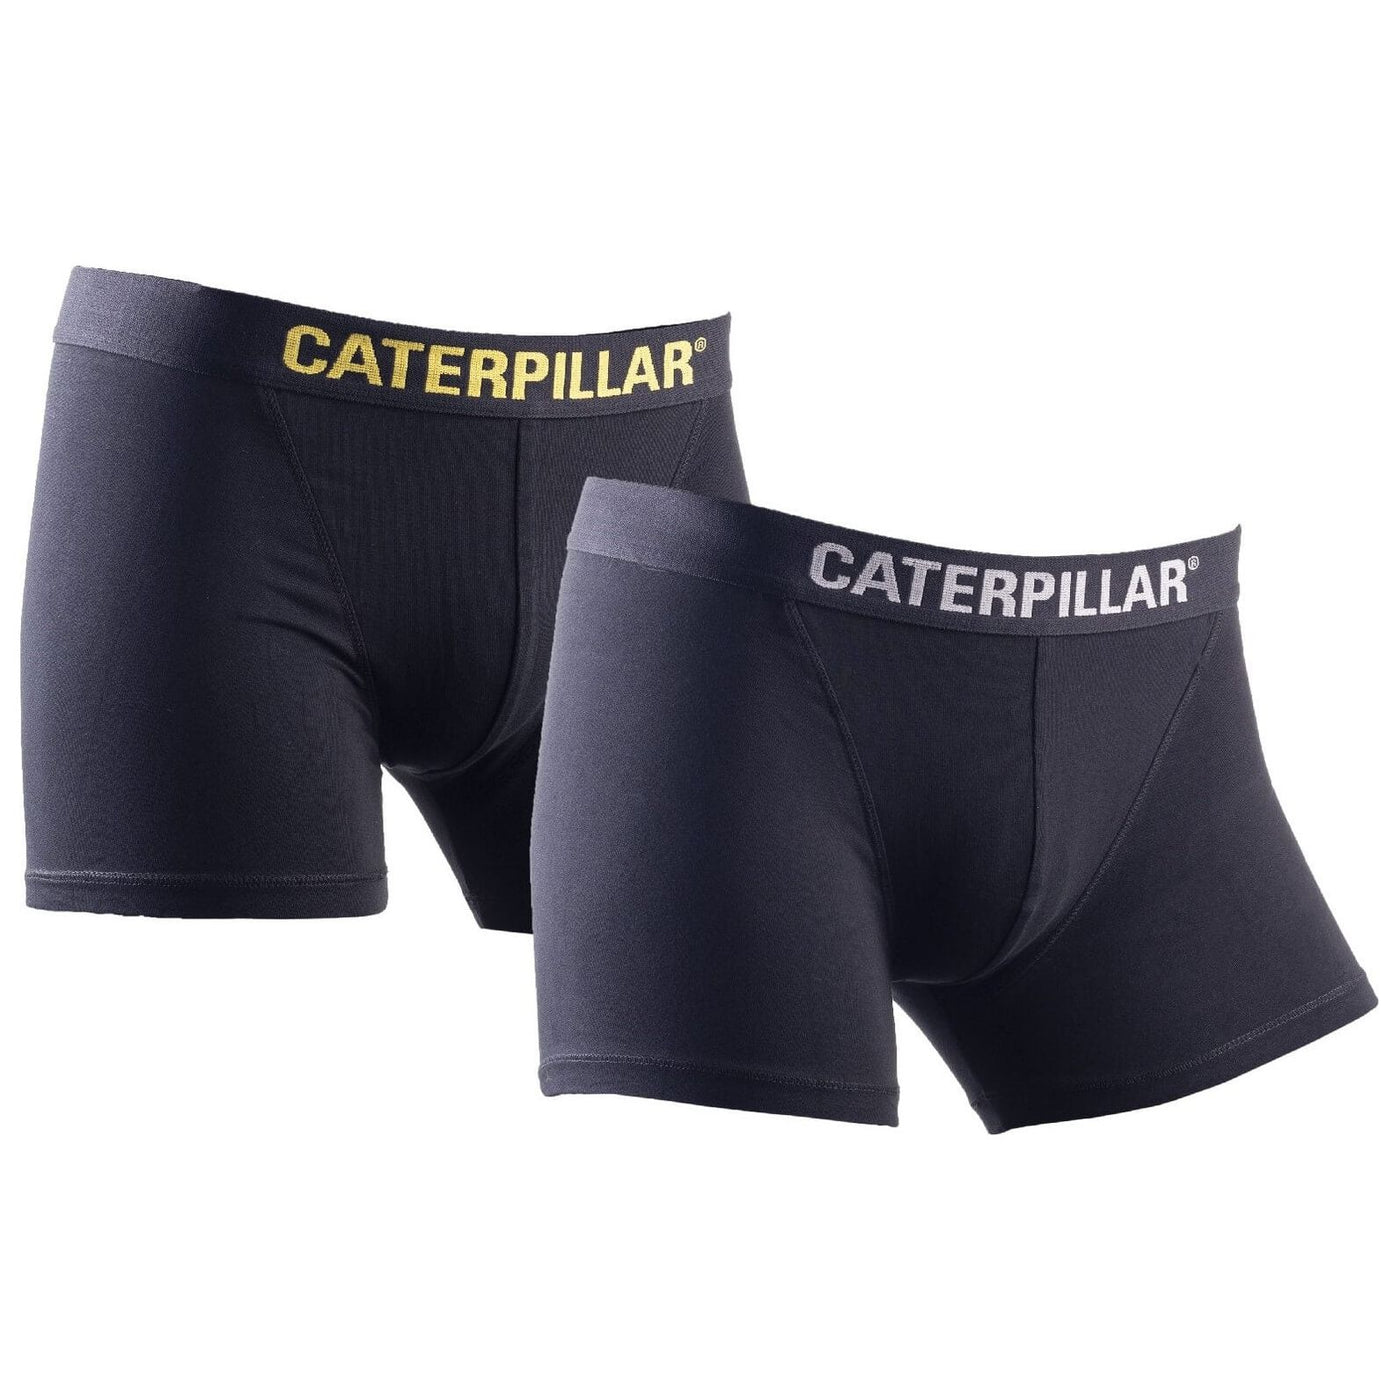 Caterpillar Boxer Shorts 2-Pack-Black-Yellow-Charcoal-Main